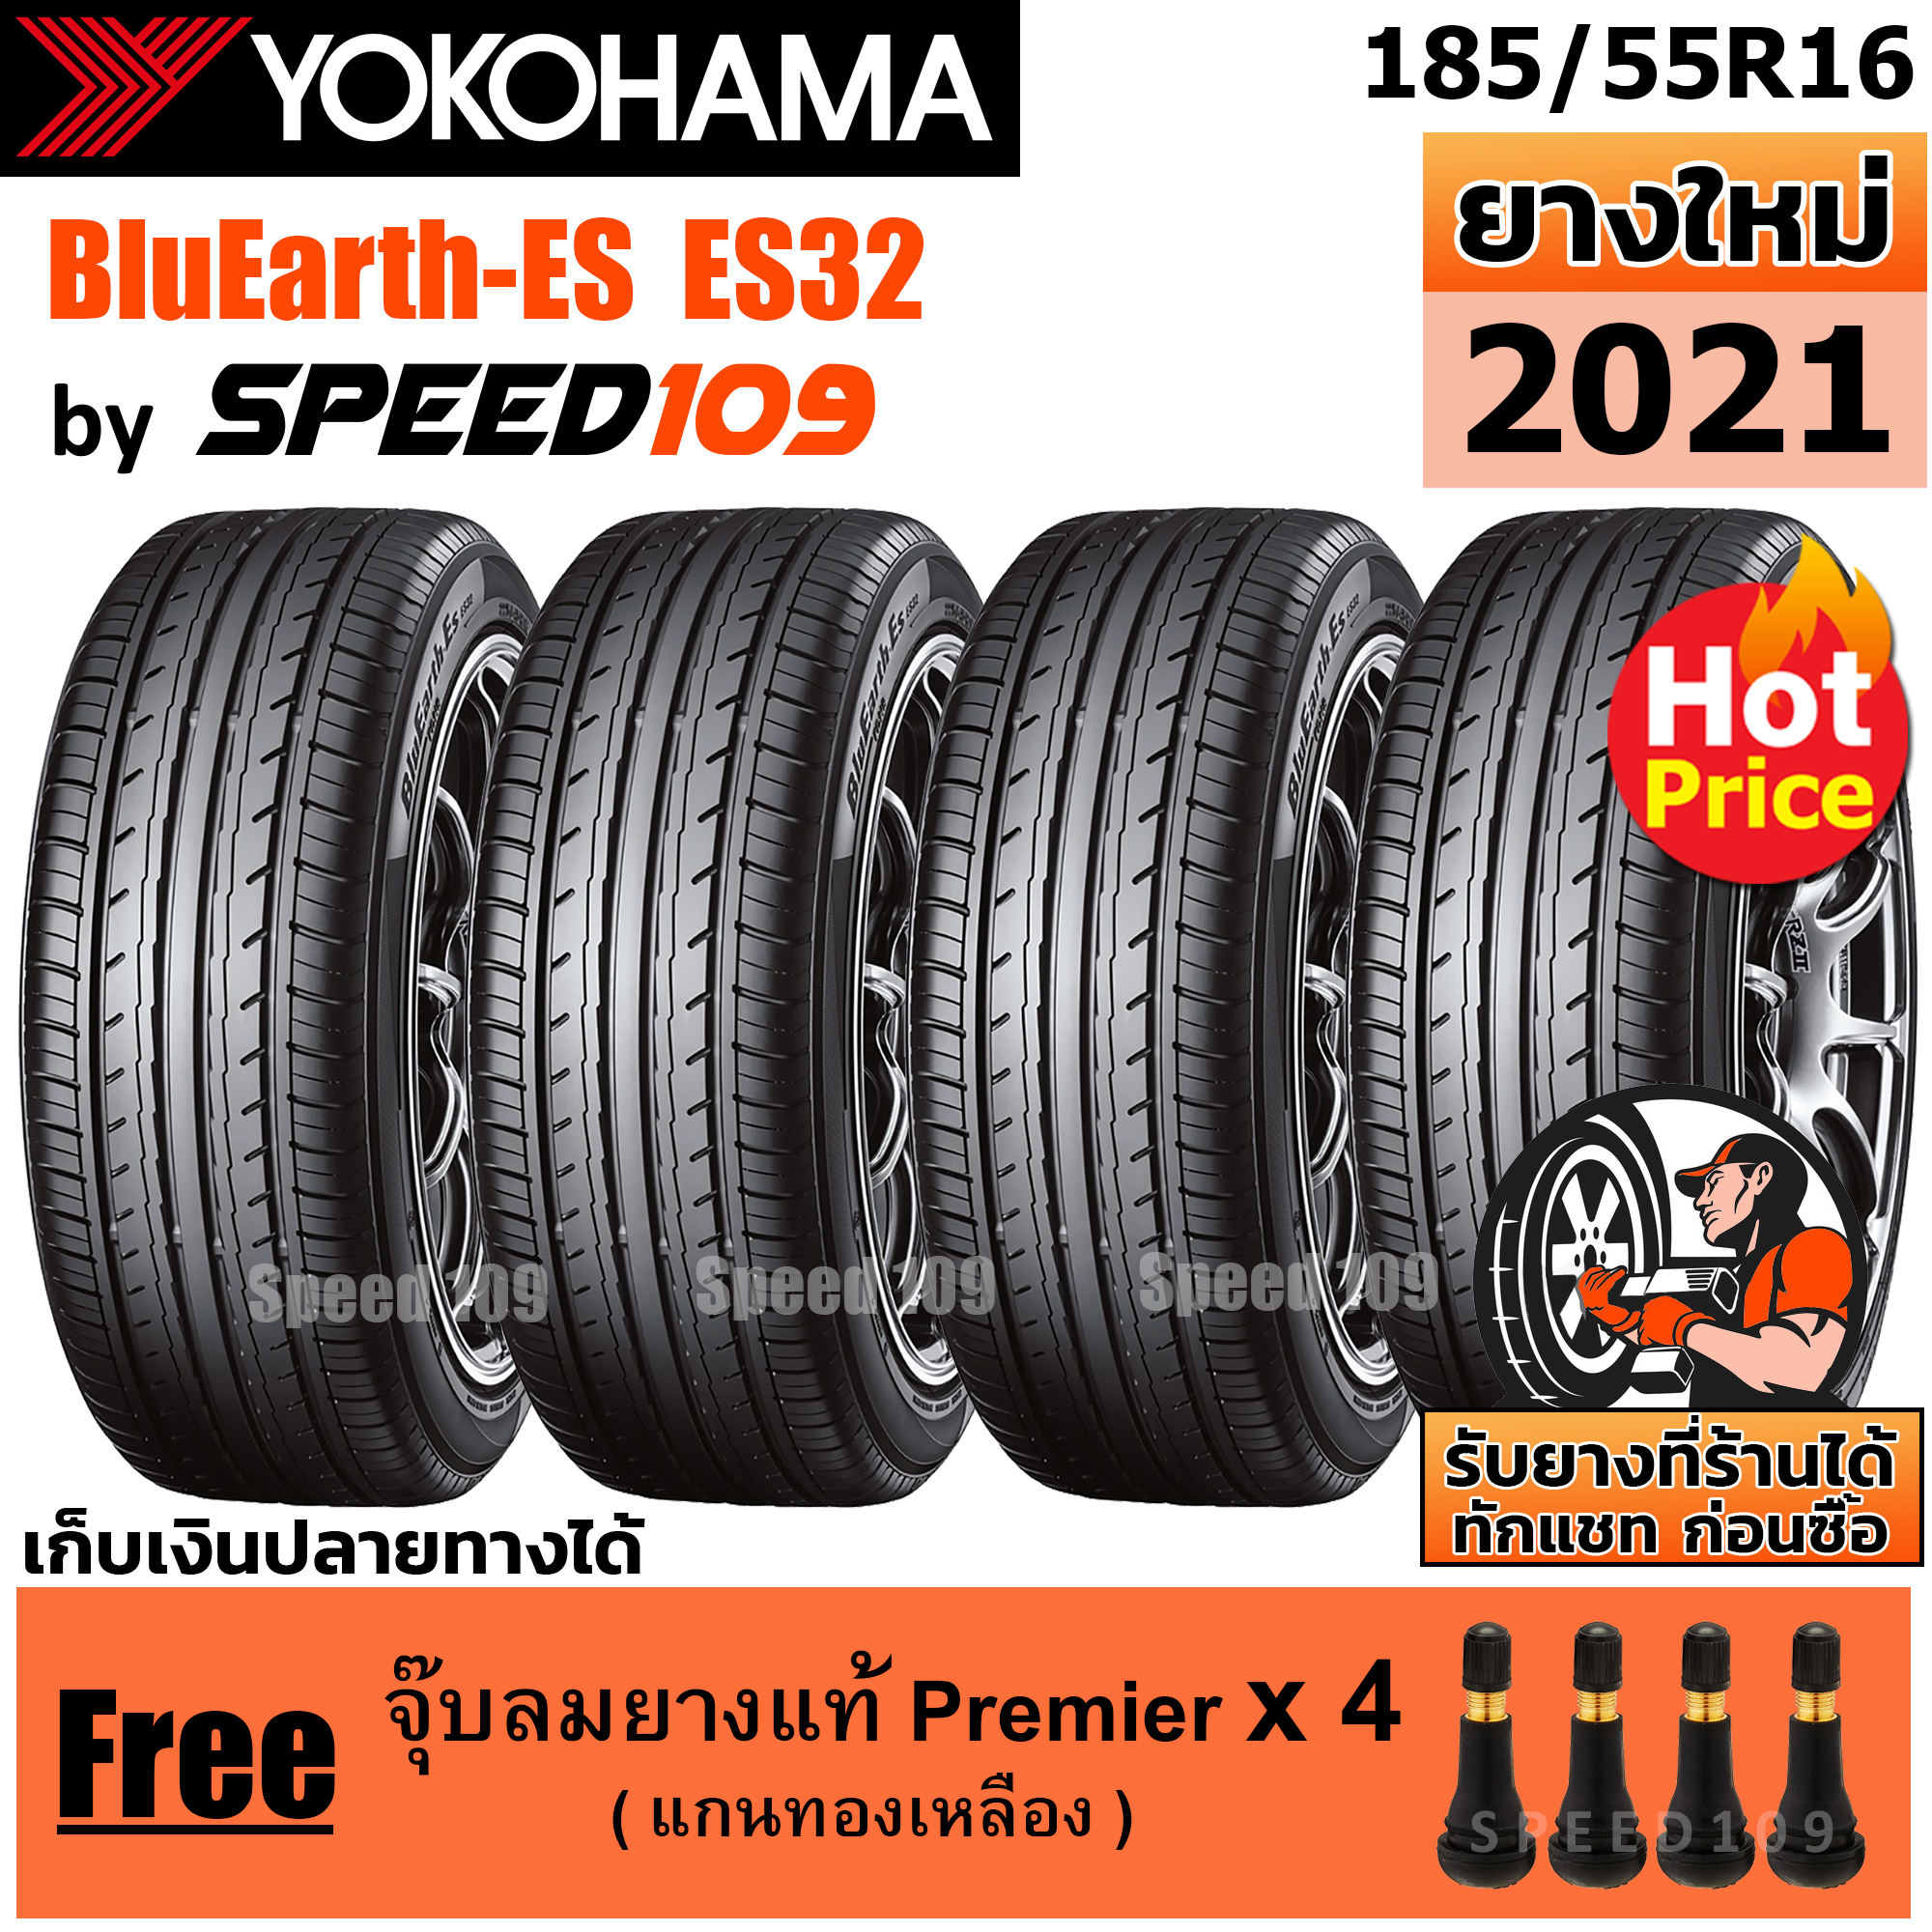 YOKOHAMA ยางรถยนต์ ขอบ 16 ขนาด 185/55R16 รุ่น BluEarth-ES ES32 - 4 เส้น (ปี 2021)